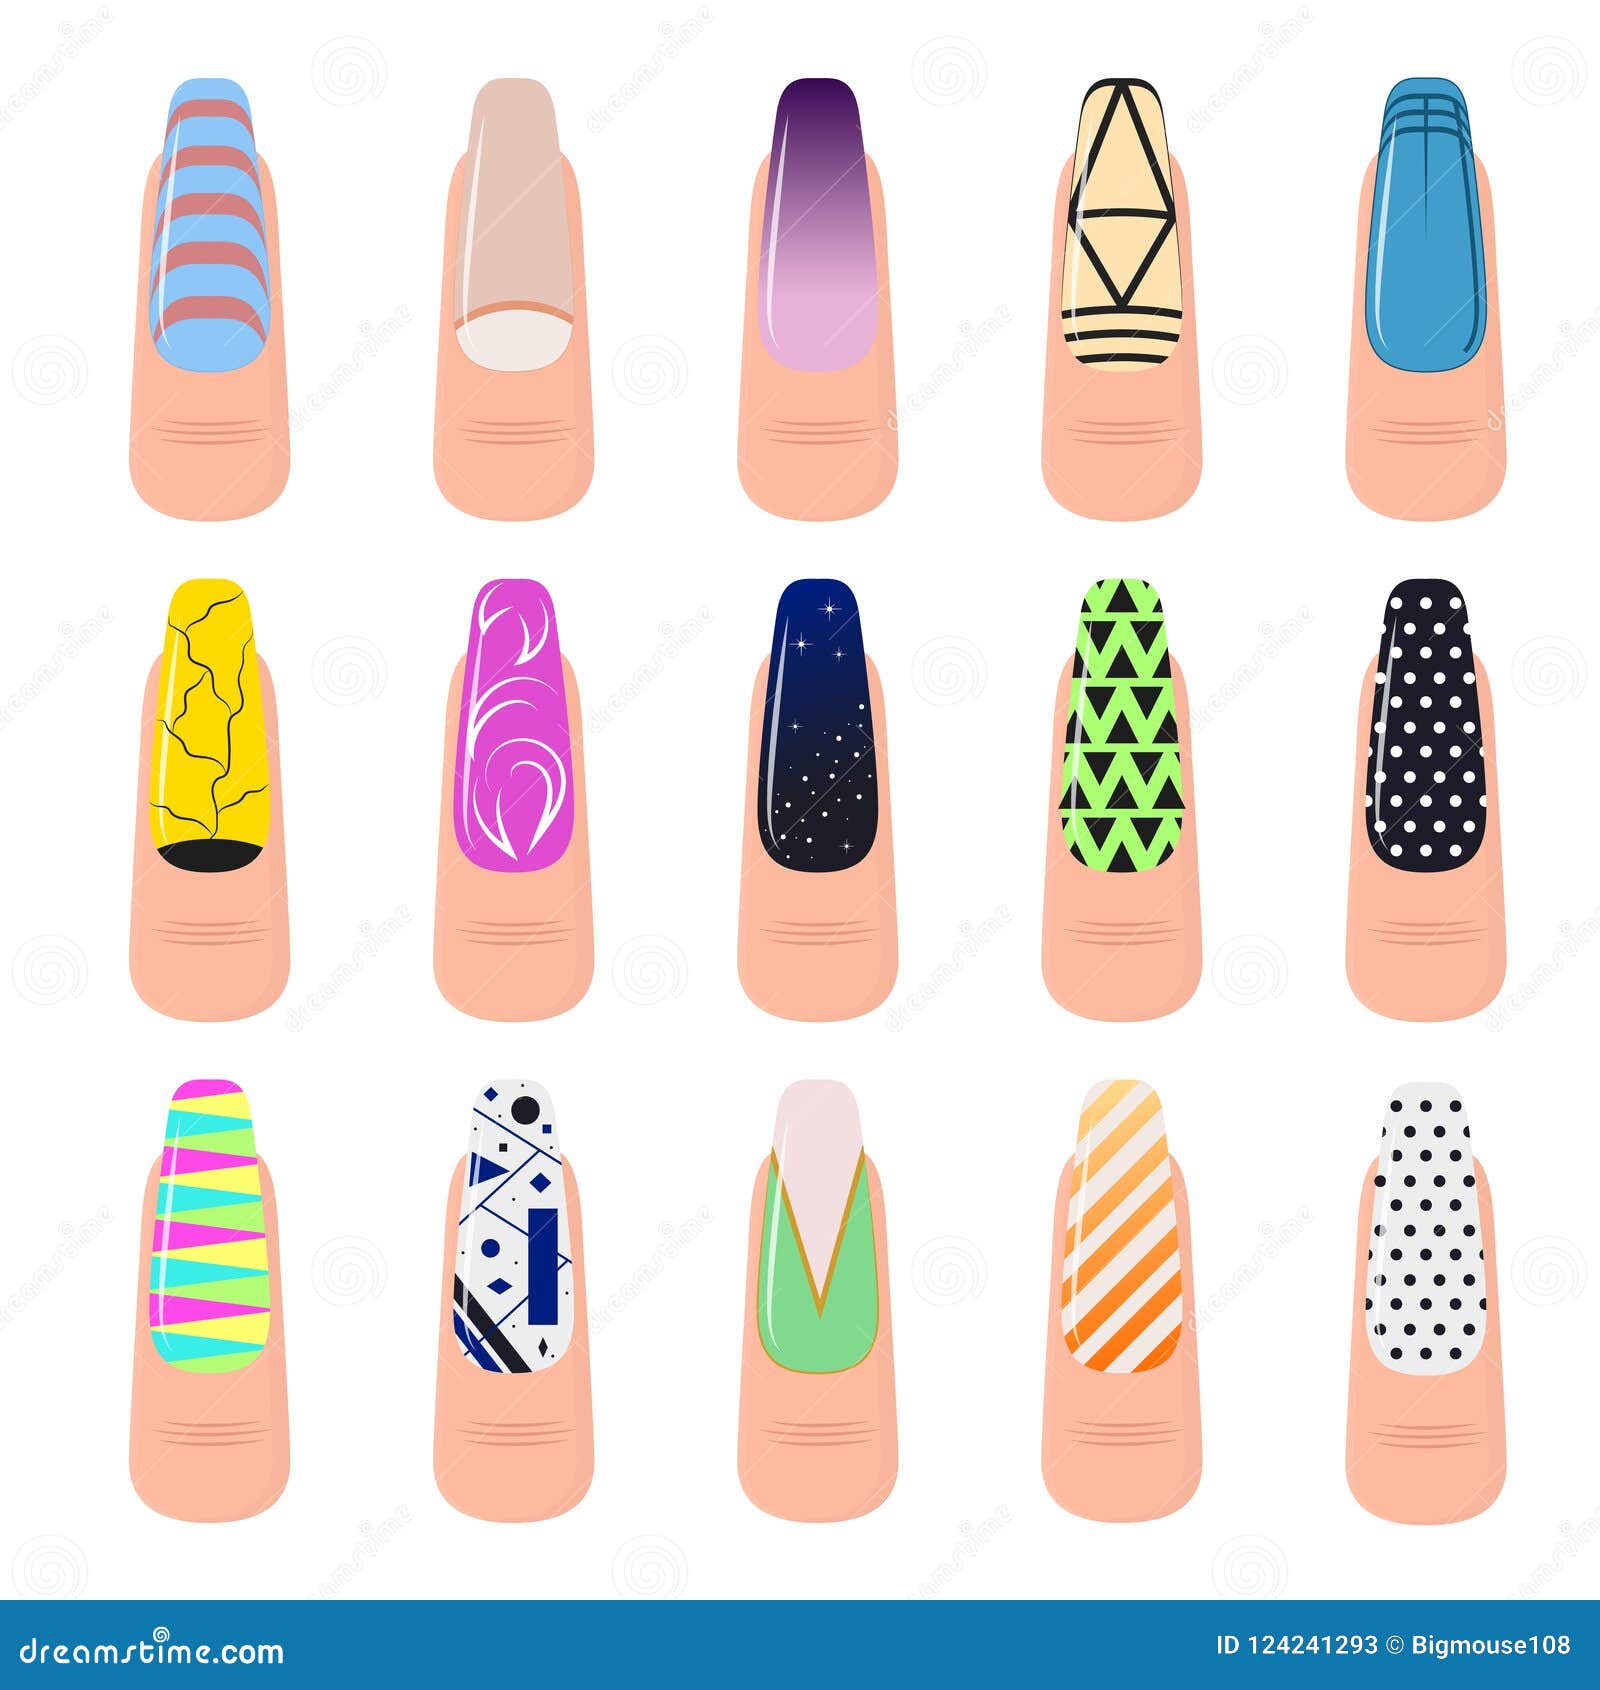 special unicorn self-adhesive nail art tip| Alibaba.com